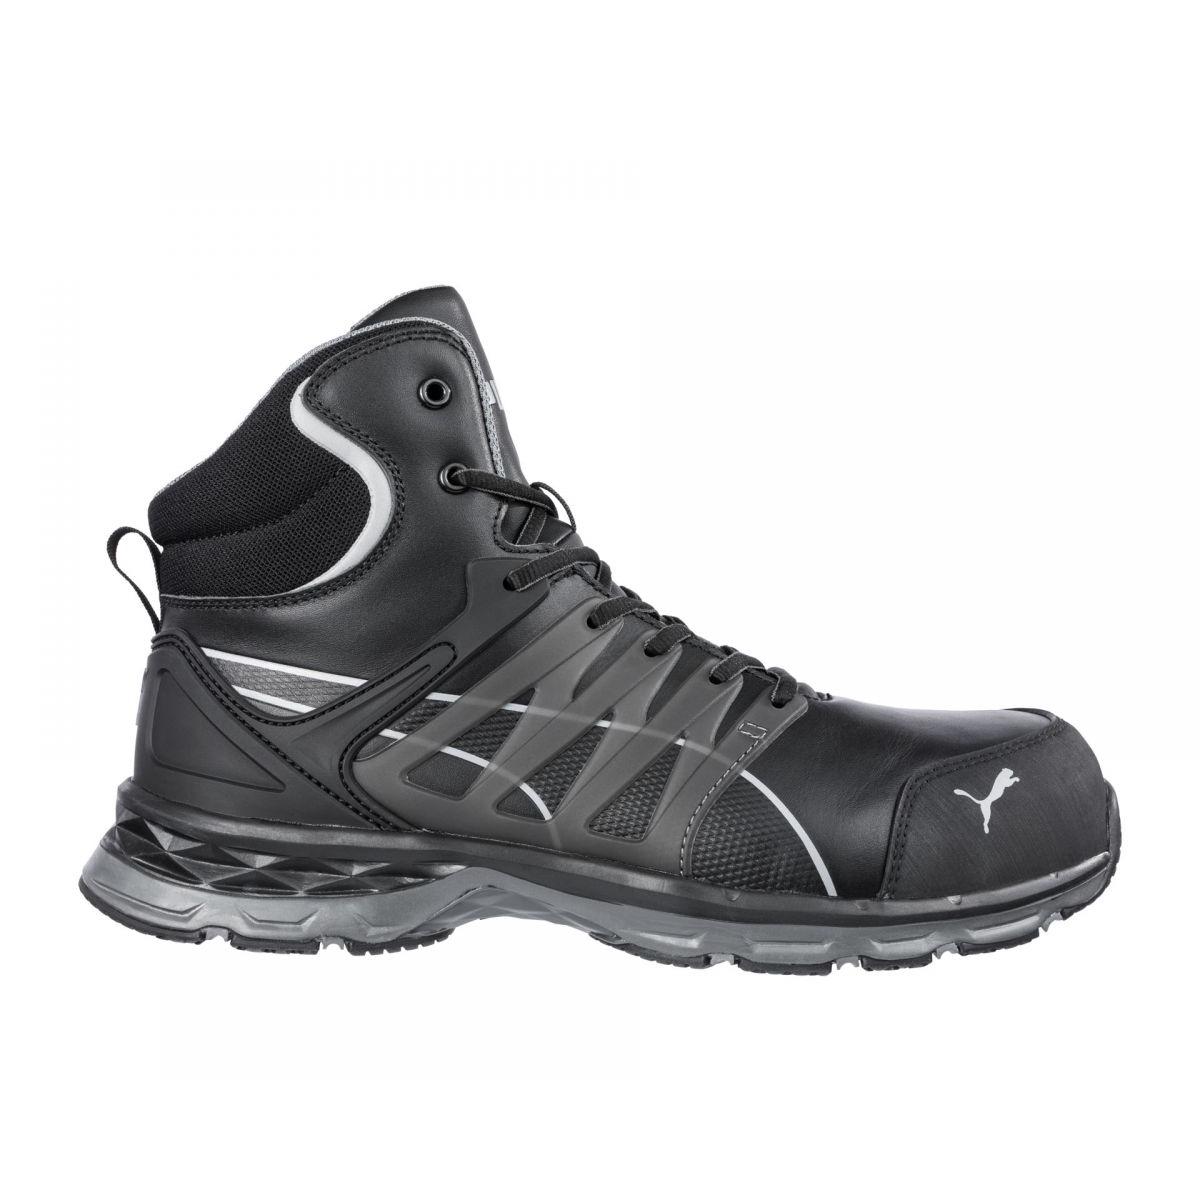 PUMA Safety Men's Velocity 2.0 Mid Composite Toe ESD Work Boot Black - 633805 ONE SIZE BLACK - BLACK, 8